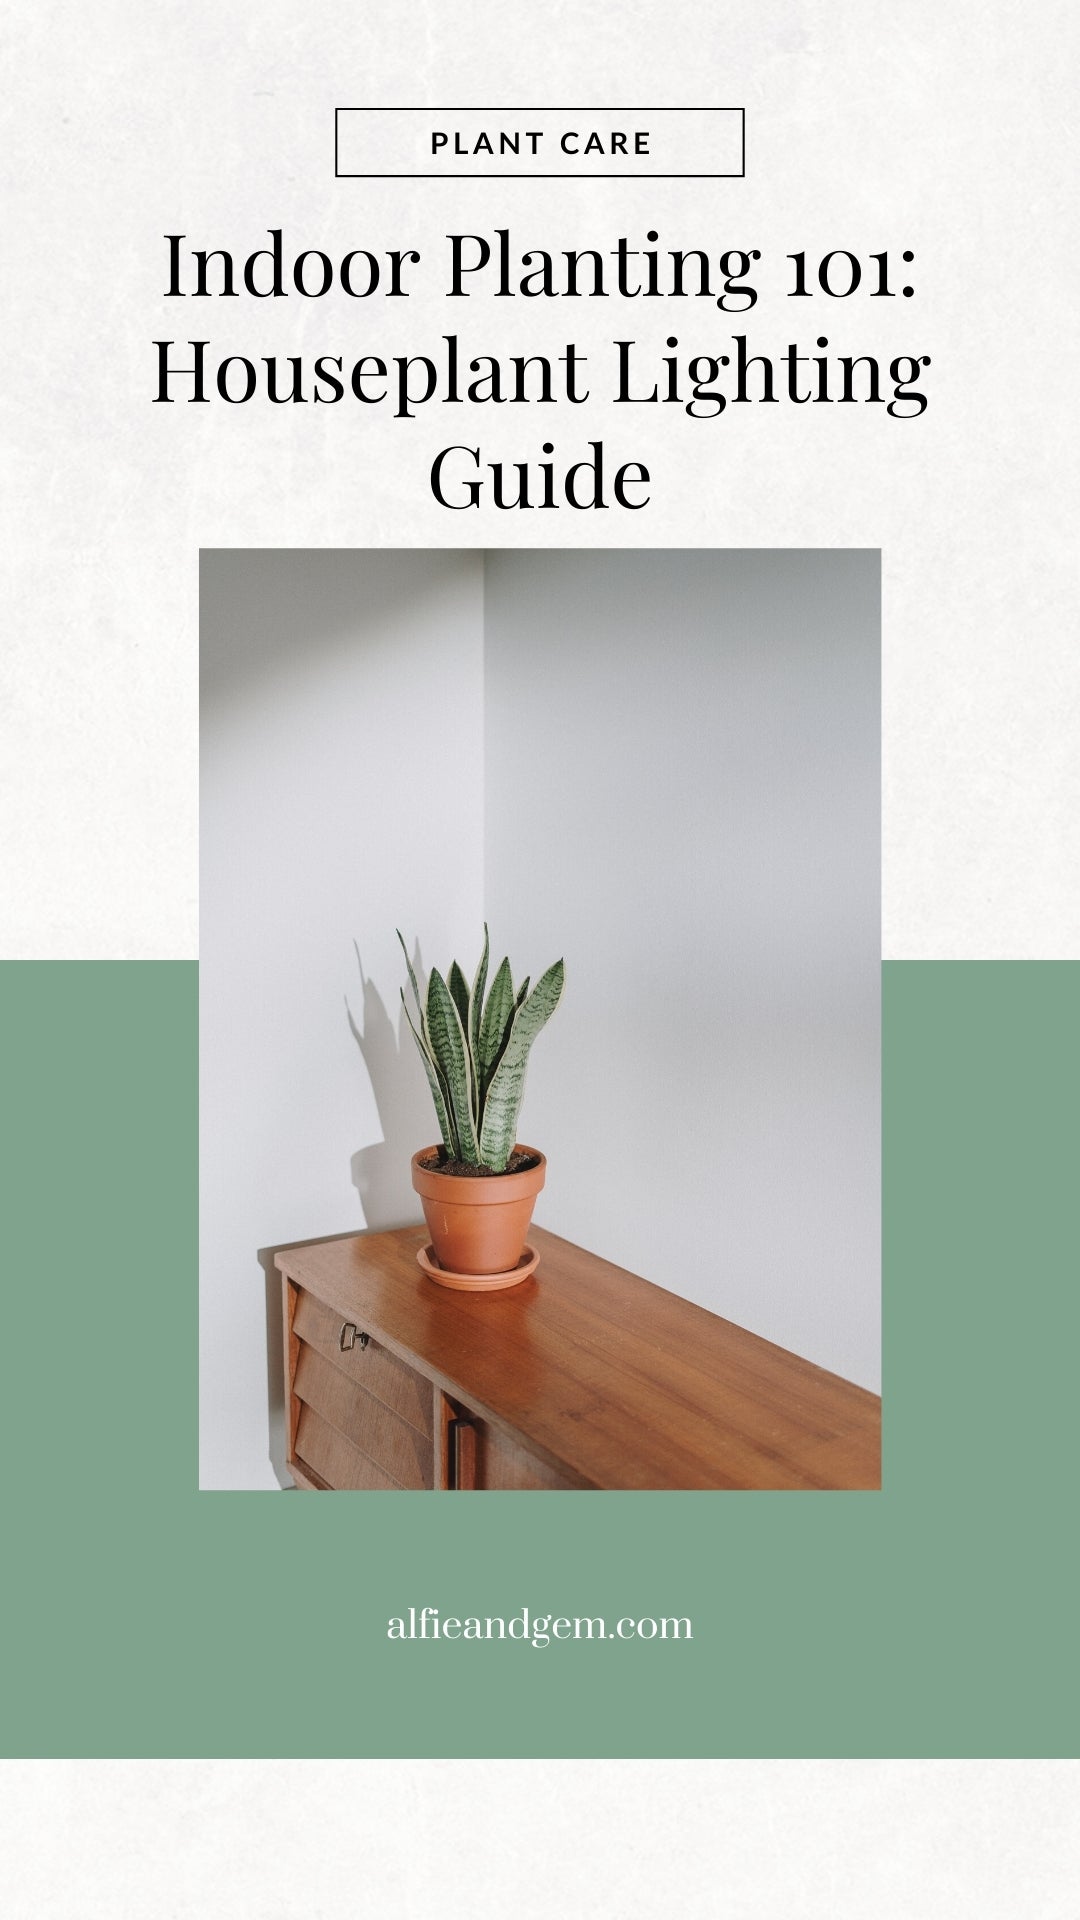 Indoor Planting 101: Houseplant Lighting Guide